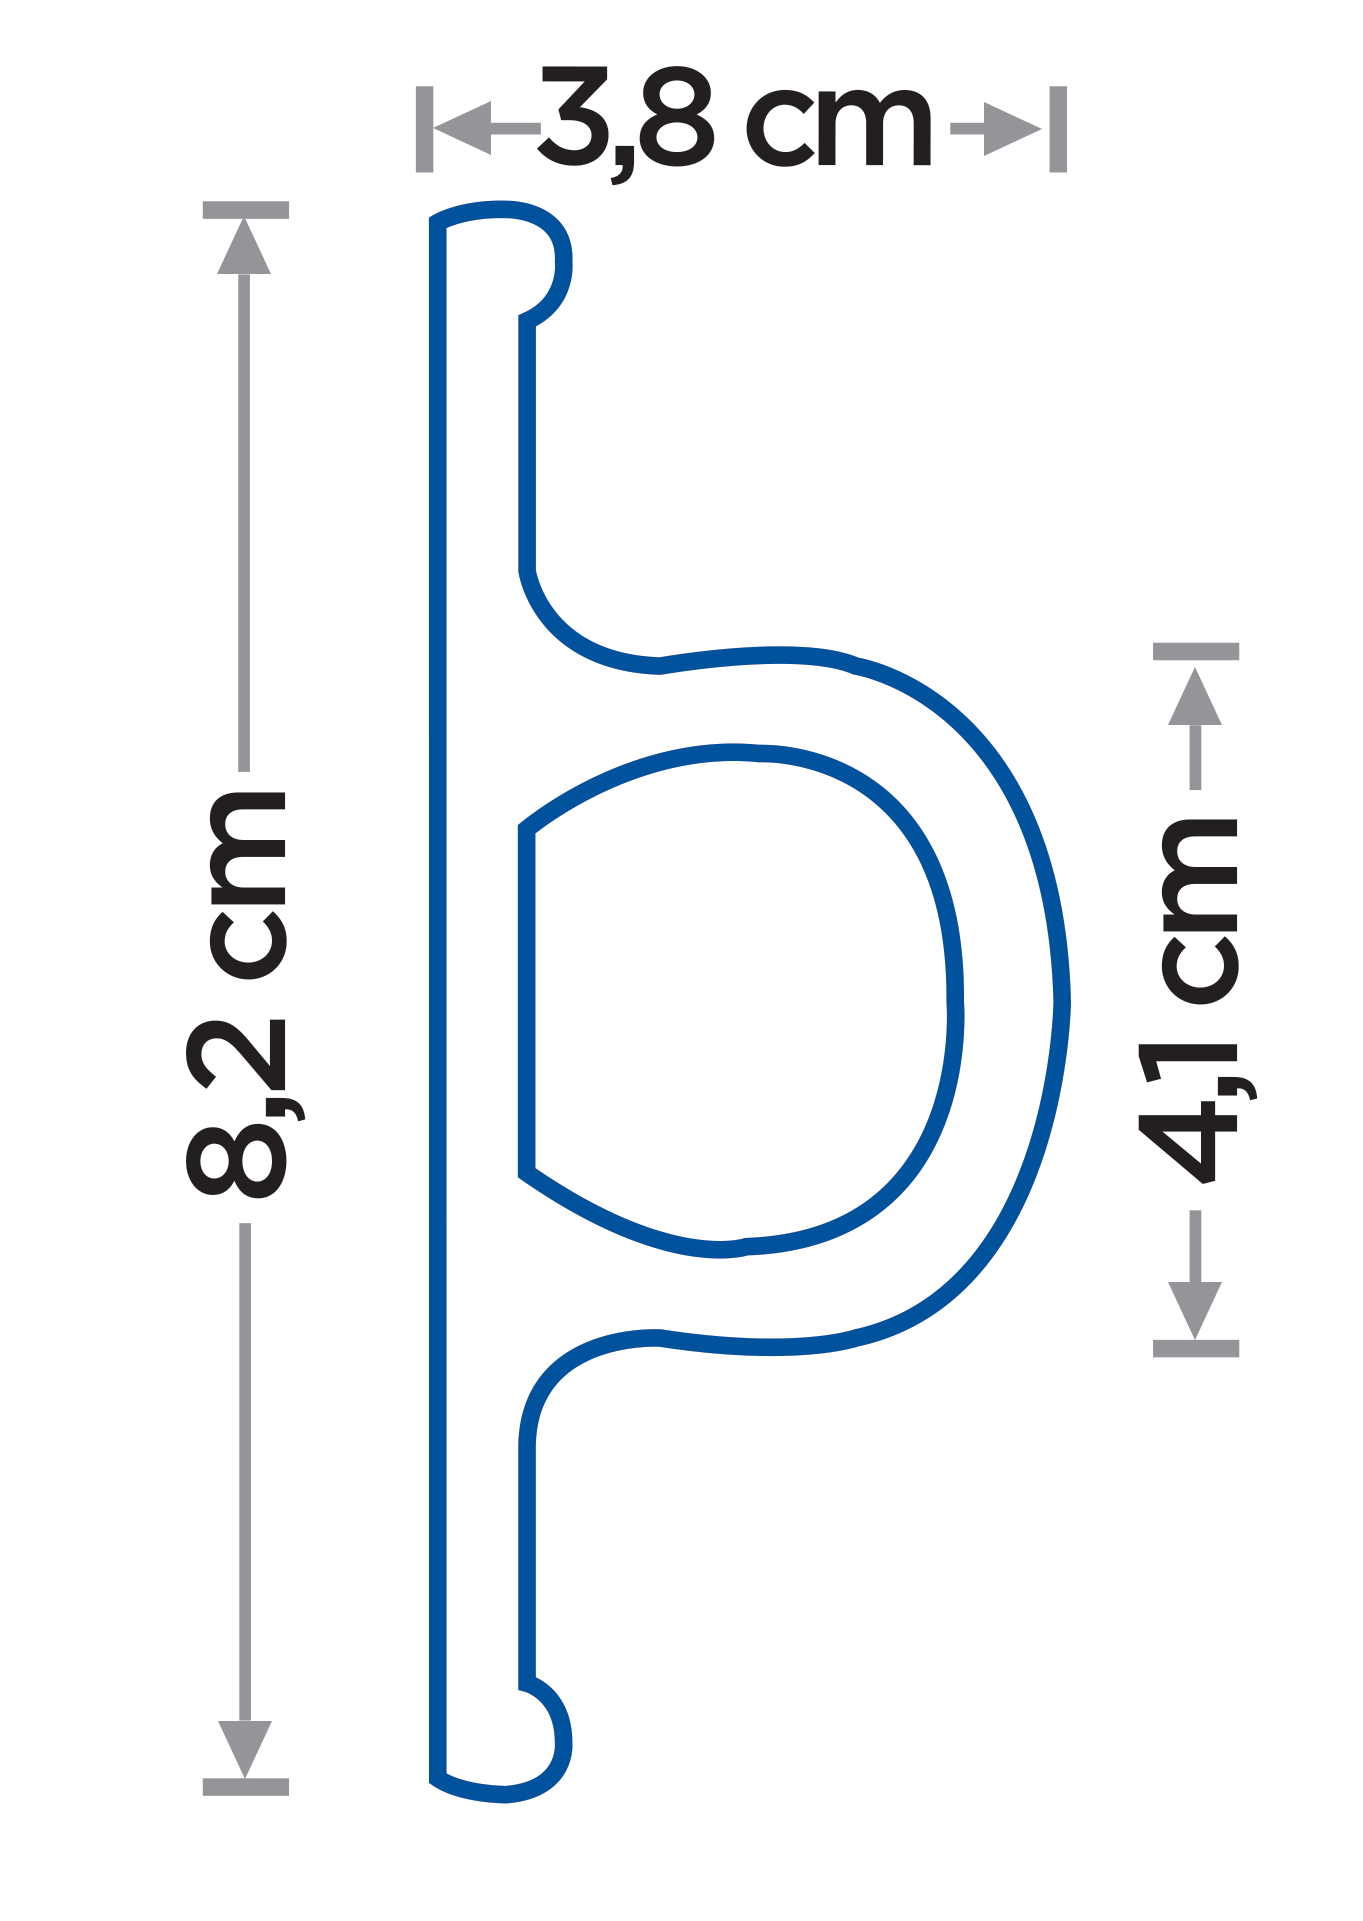 Dock guard diagram, side cut view PG-4